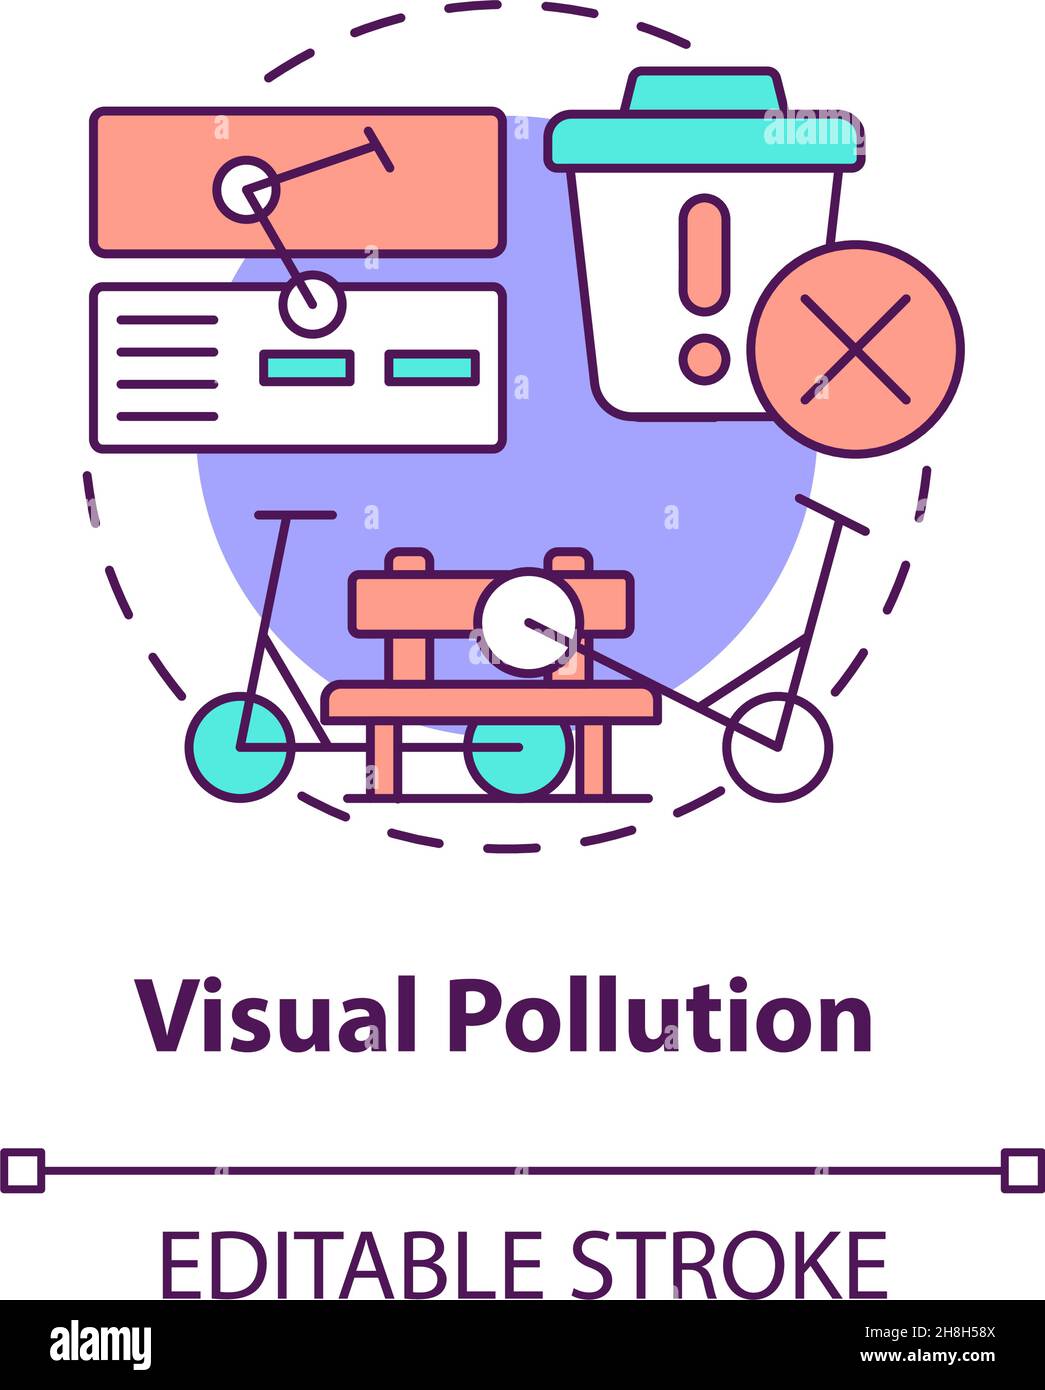 Visual pollution concept icon Stock Vector